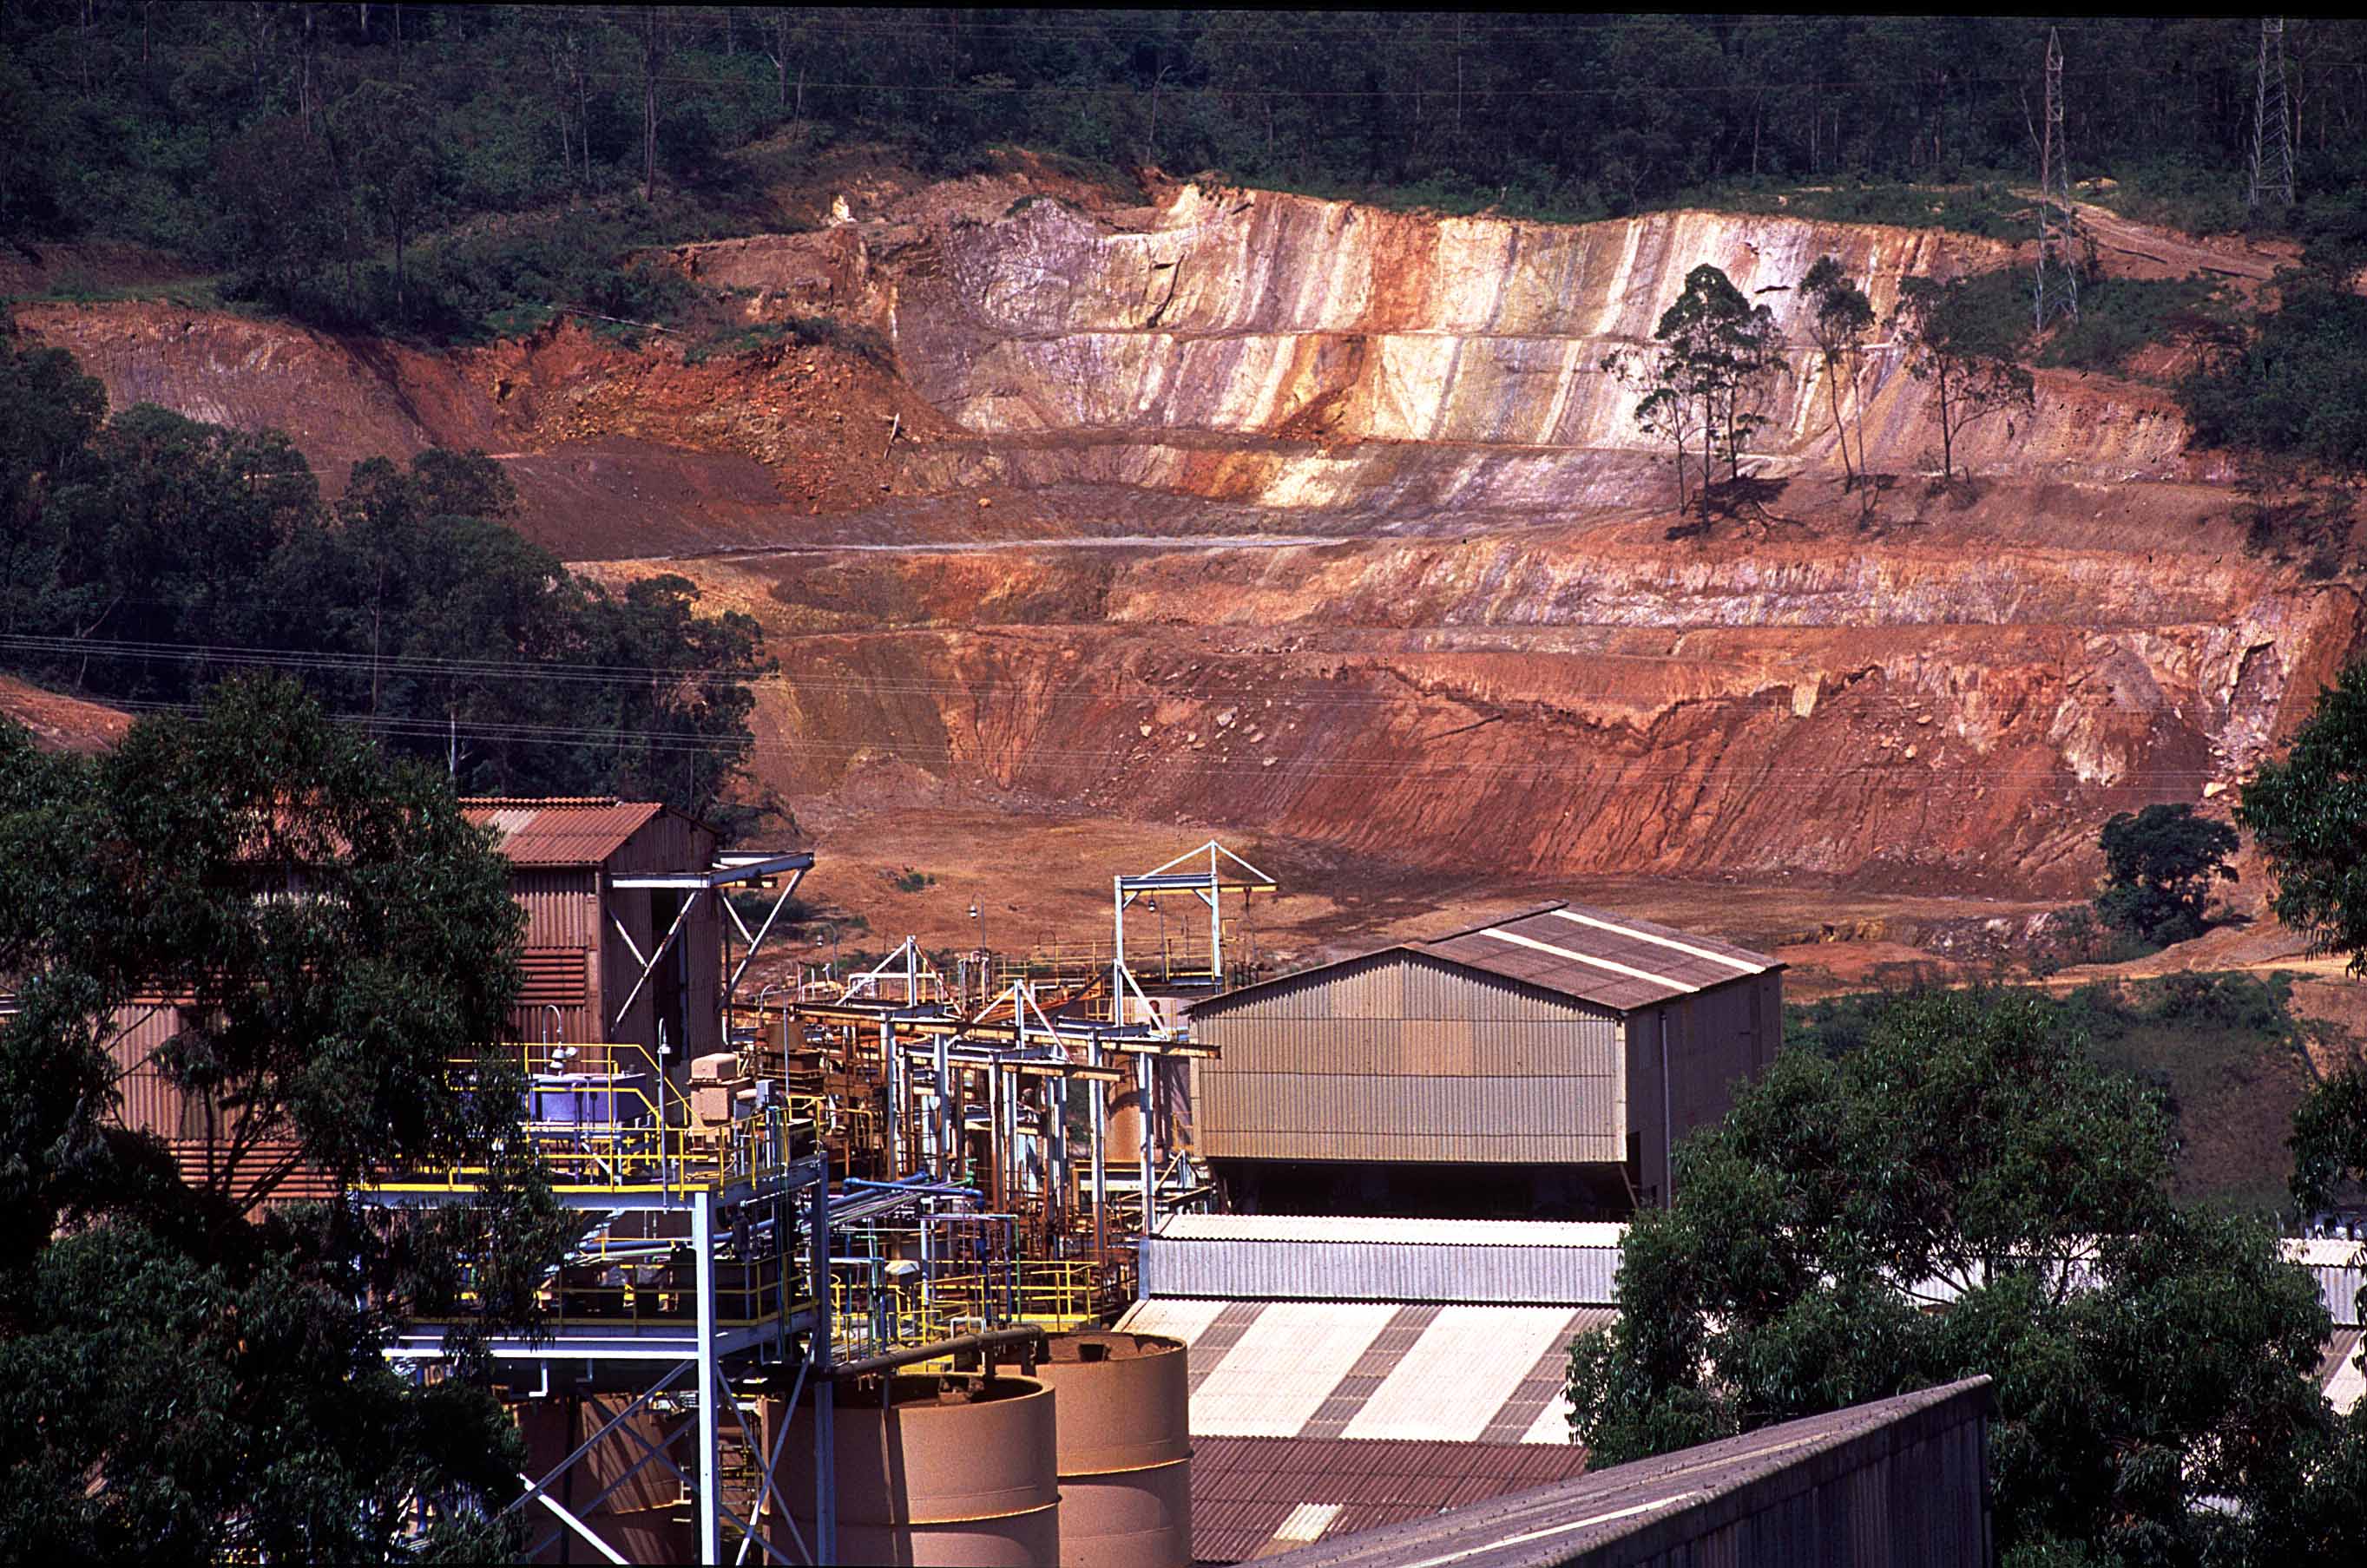 Notícias de Mineração Brasil - Bizarro: Mineração Romana Aumentou